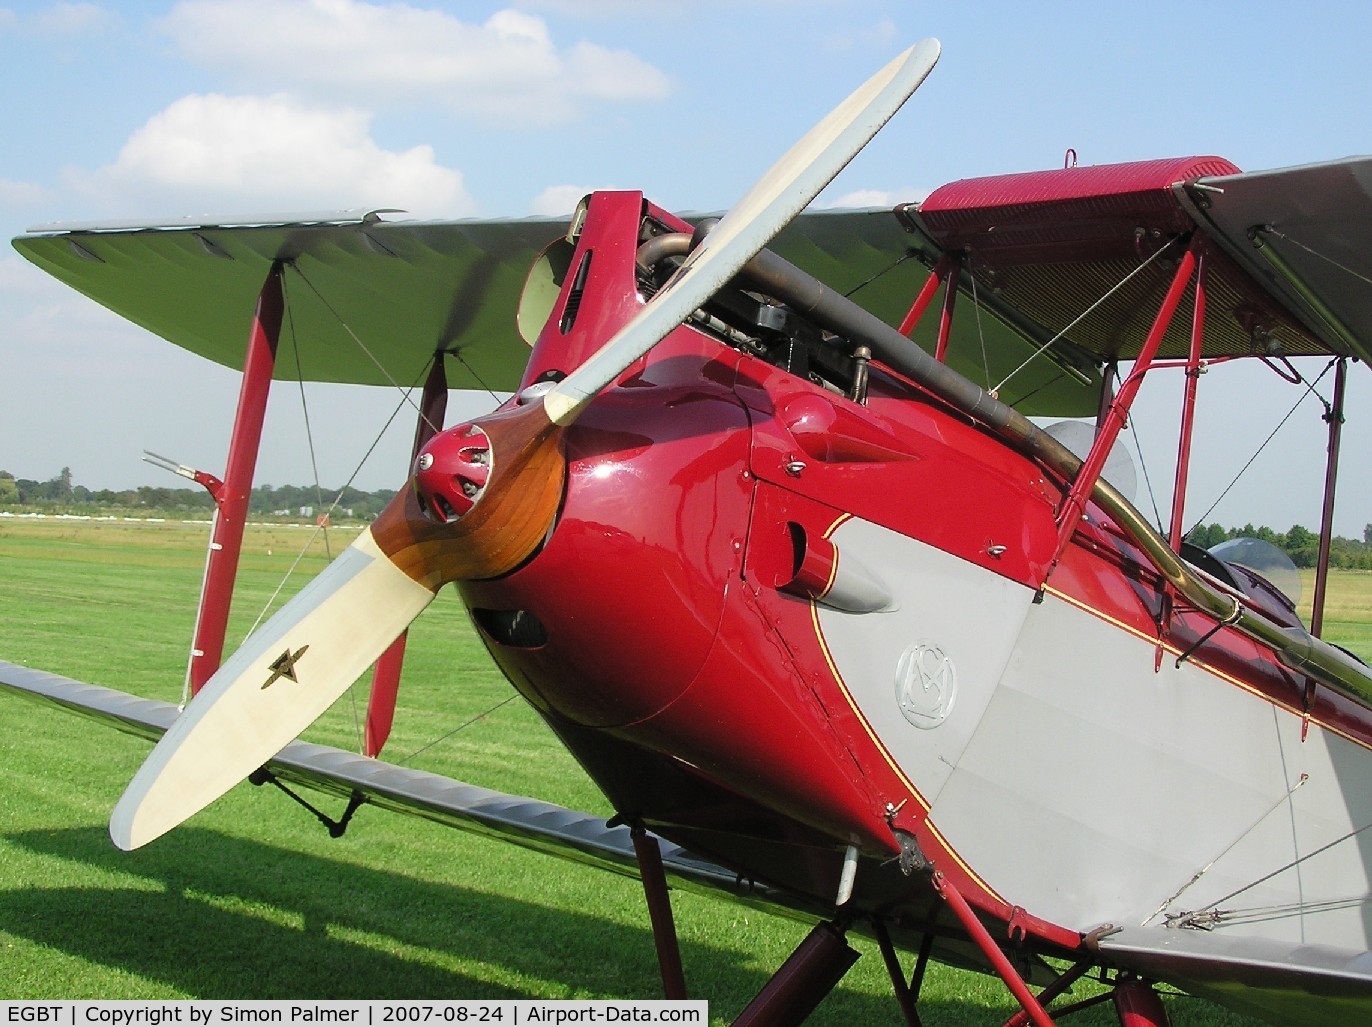 Turweston Aerodrome Airport, Turweston, England United Kingdom (EGBT) - Detail of visiting Moth at Turweston